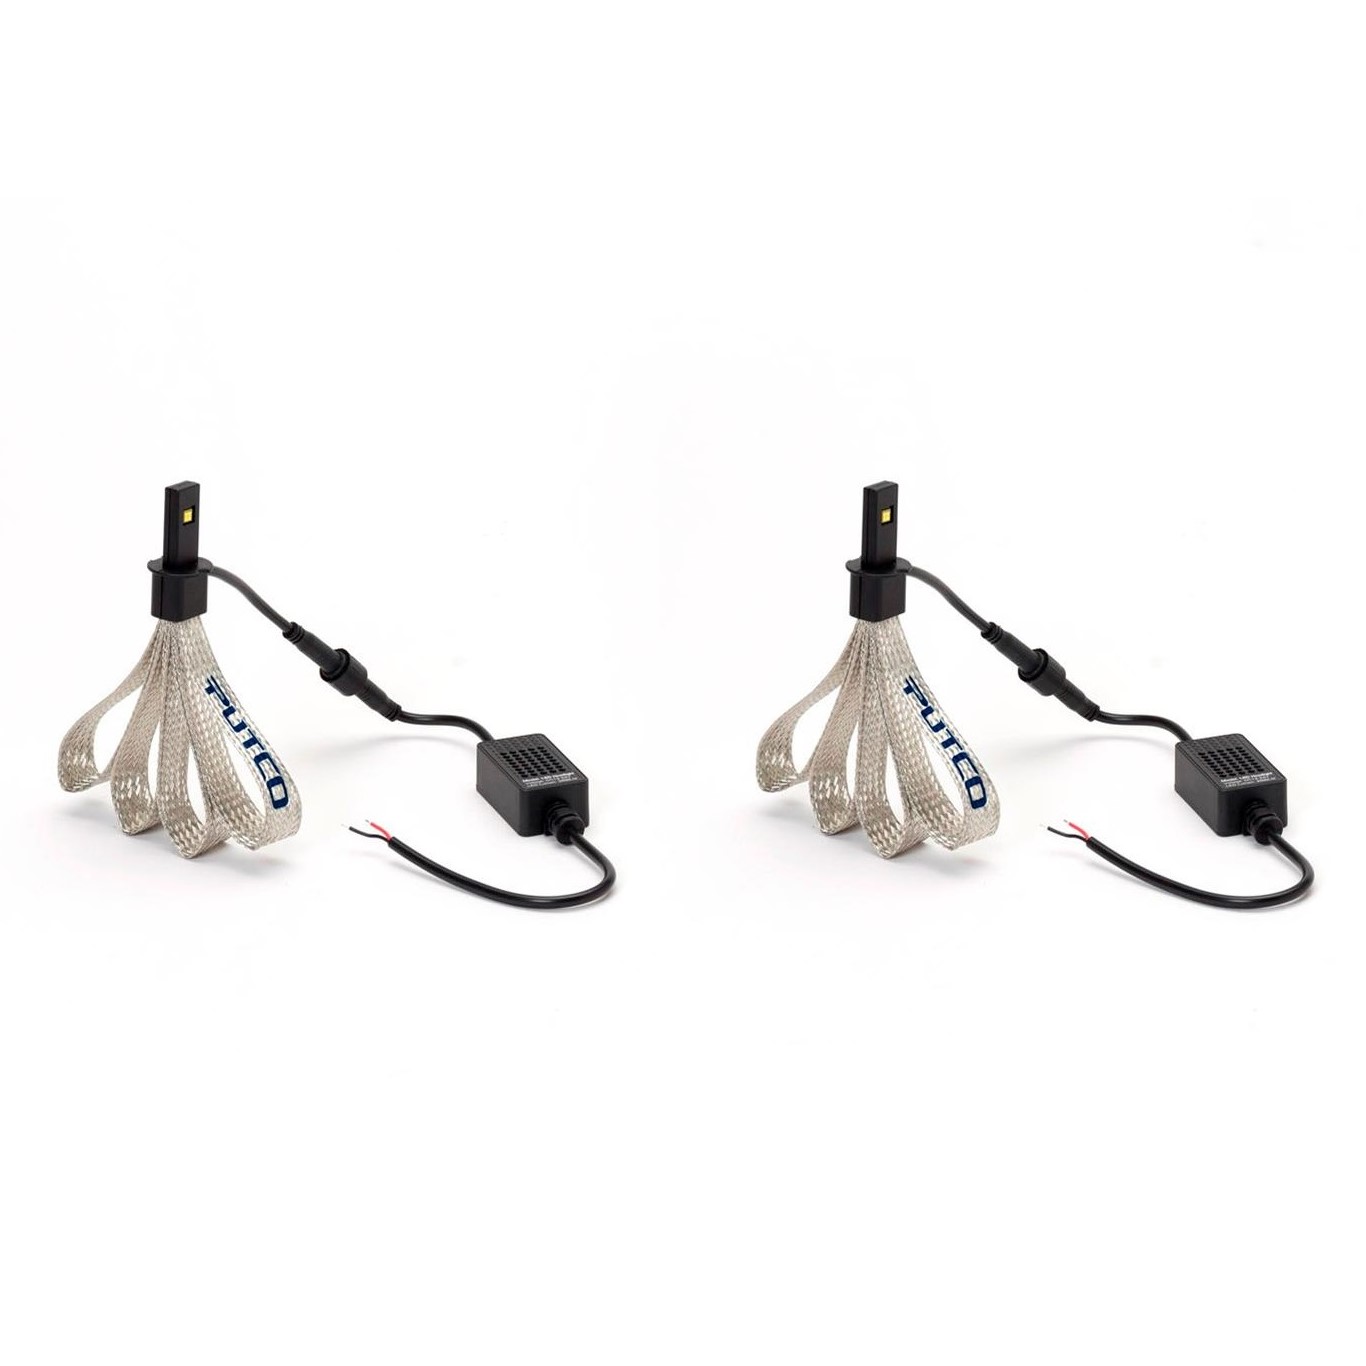 Putco Nite-Lux Replacement Bulbs